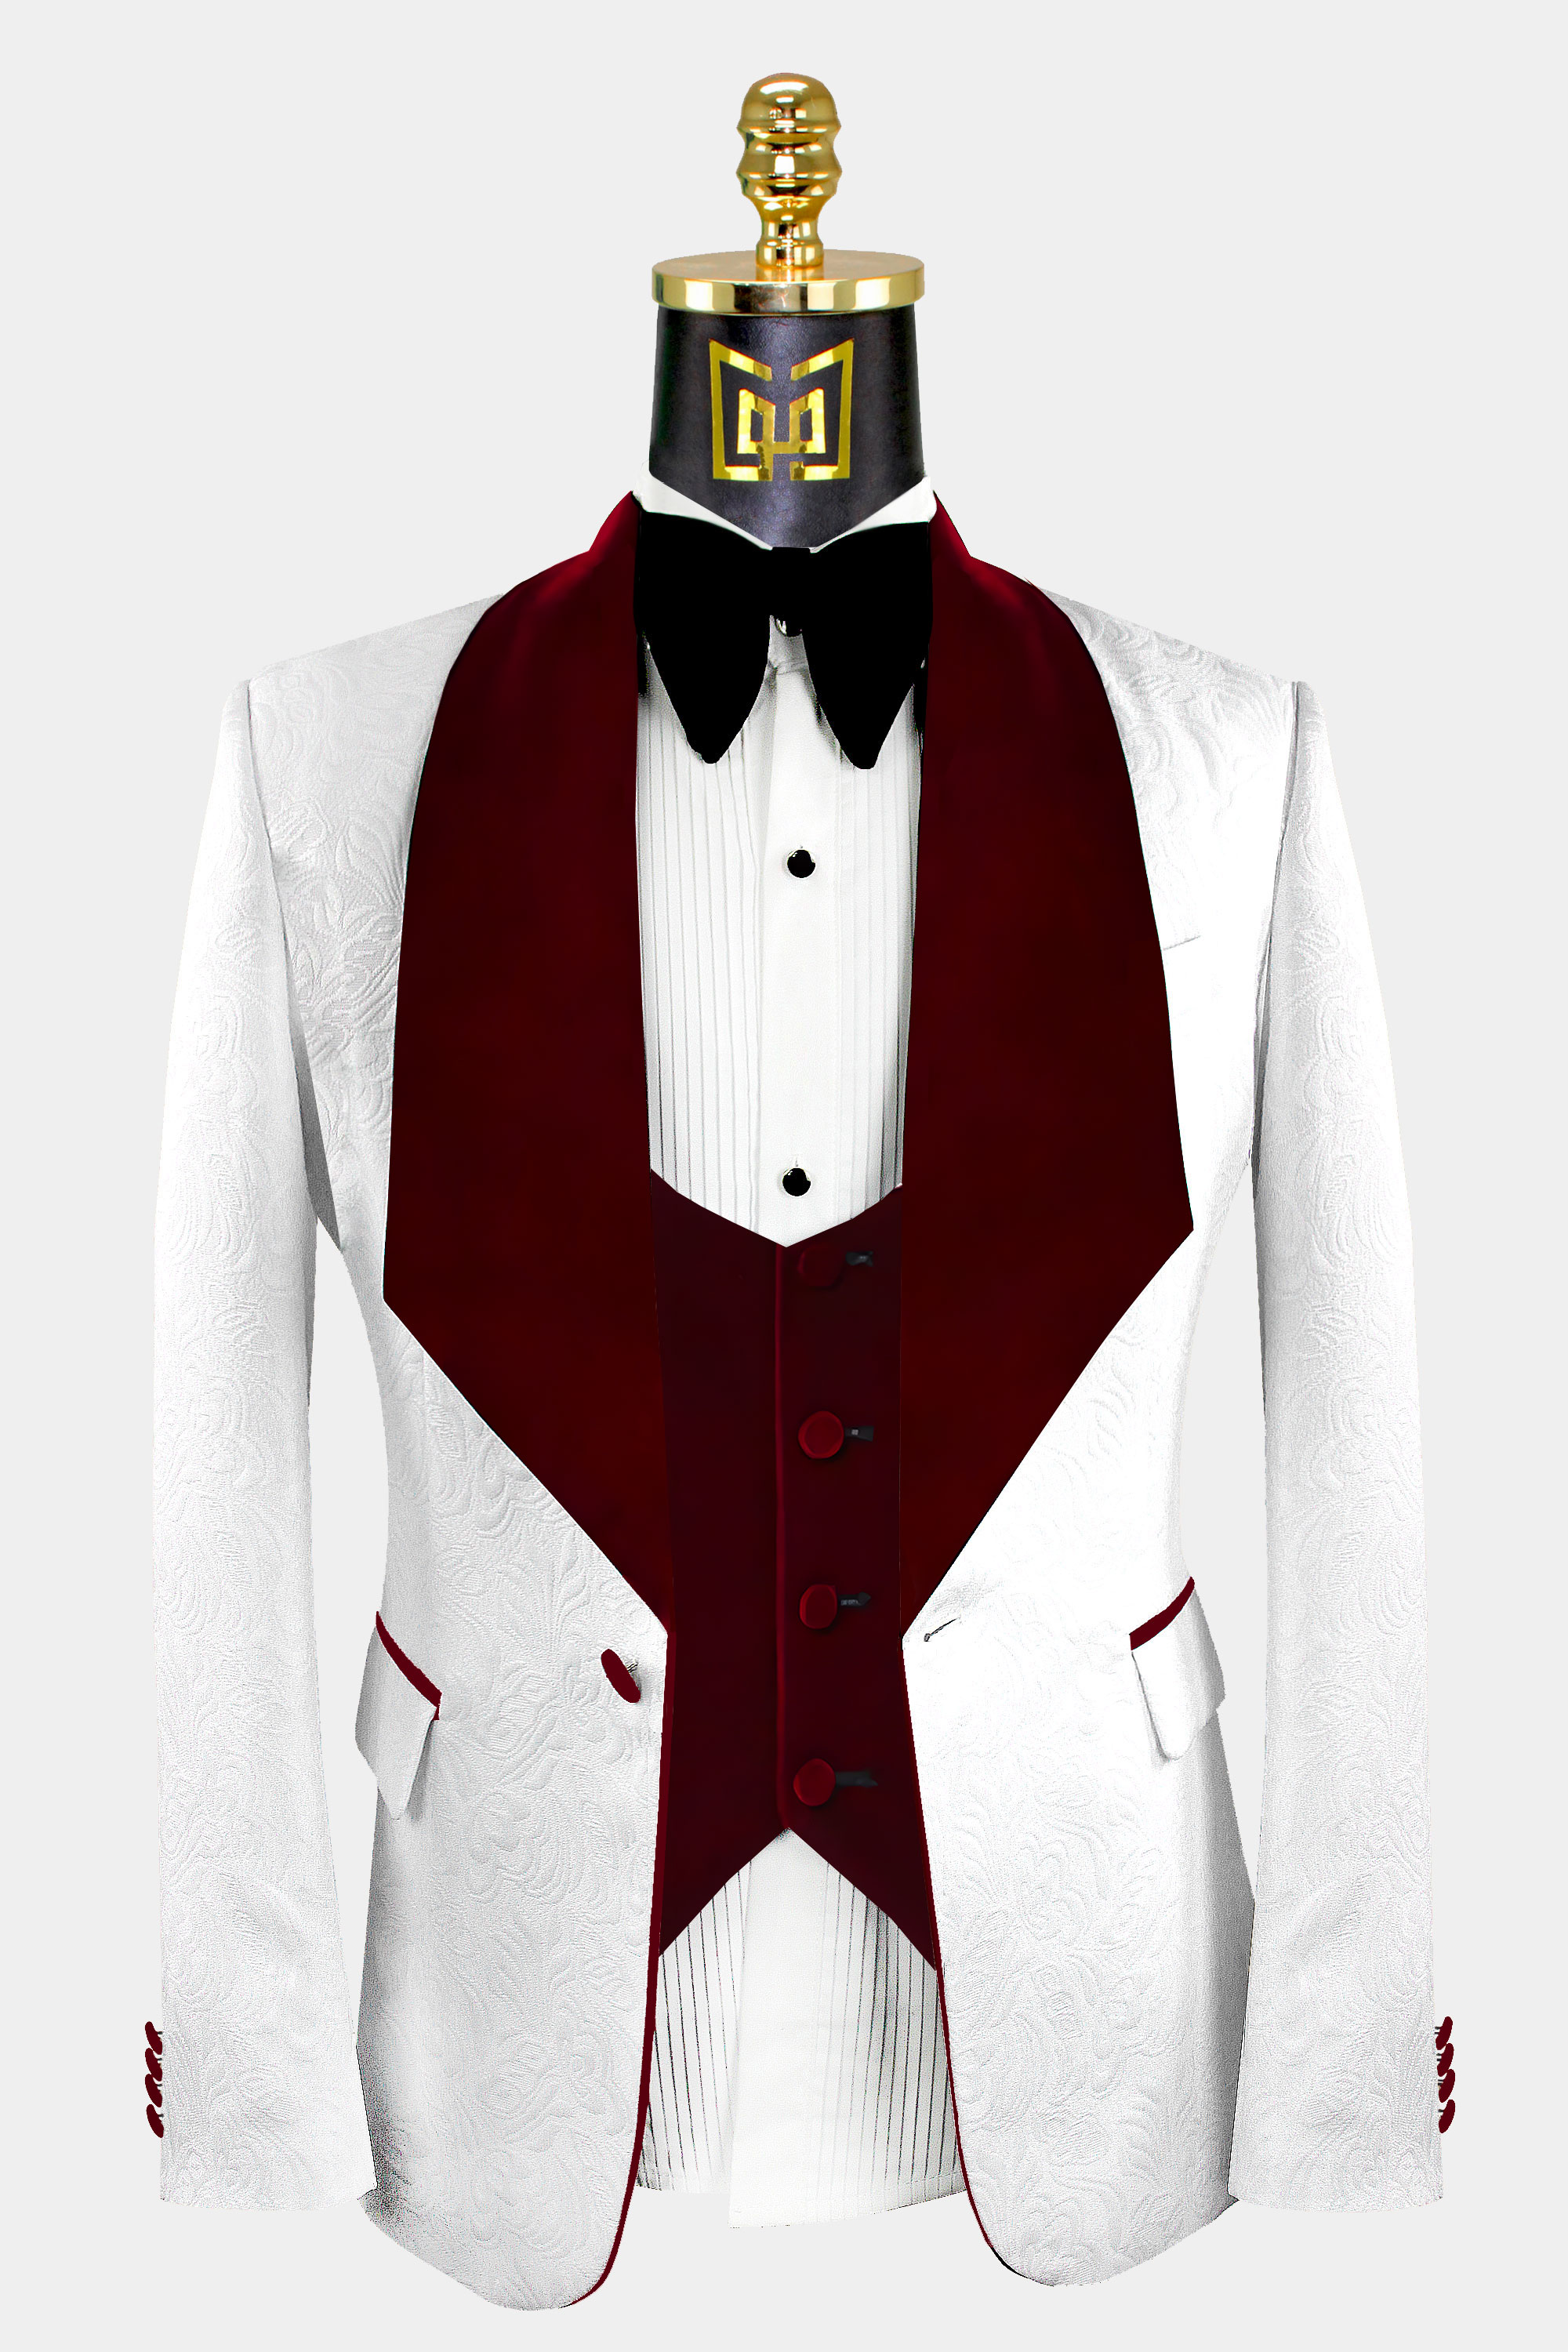 White-and-Maroon-Burgundy-Tuxedo-Grom-Wedding-Suit-For-Men-from-Gentlemansguru.com